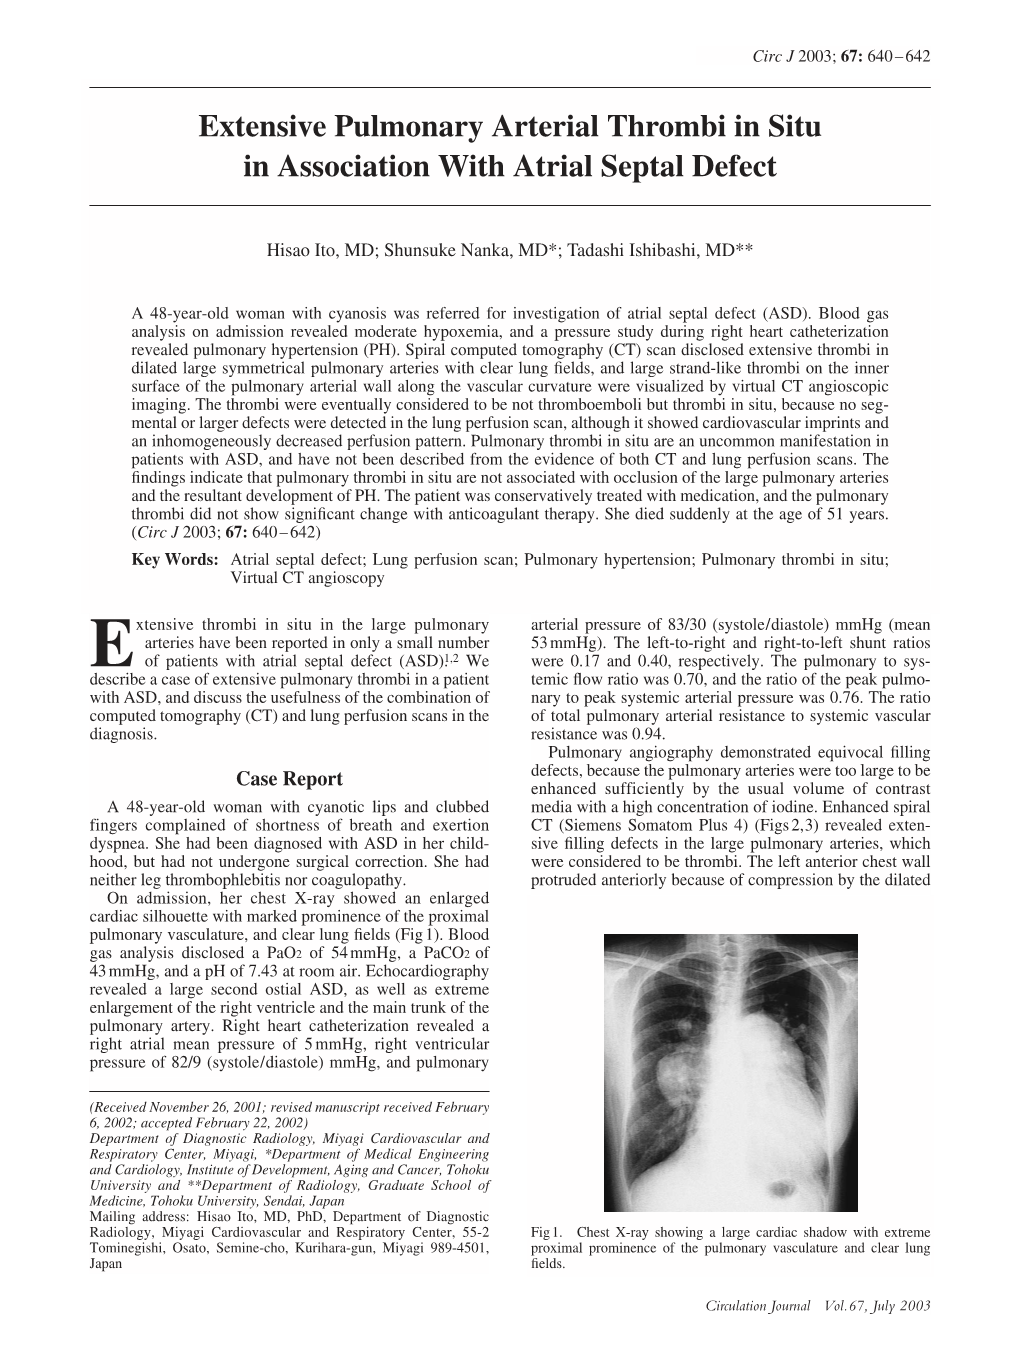 Extensive Pulmonary Arterial Thrombi in Situ in Association with Atrial Septal Defect